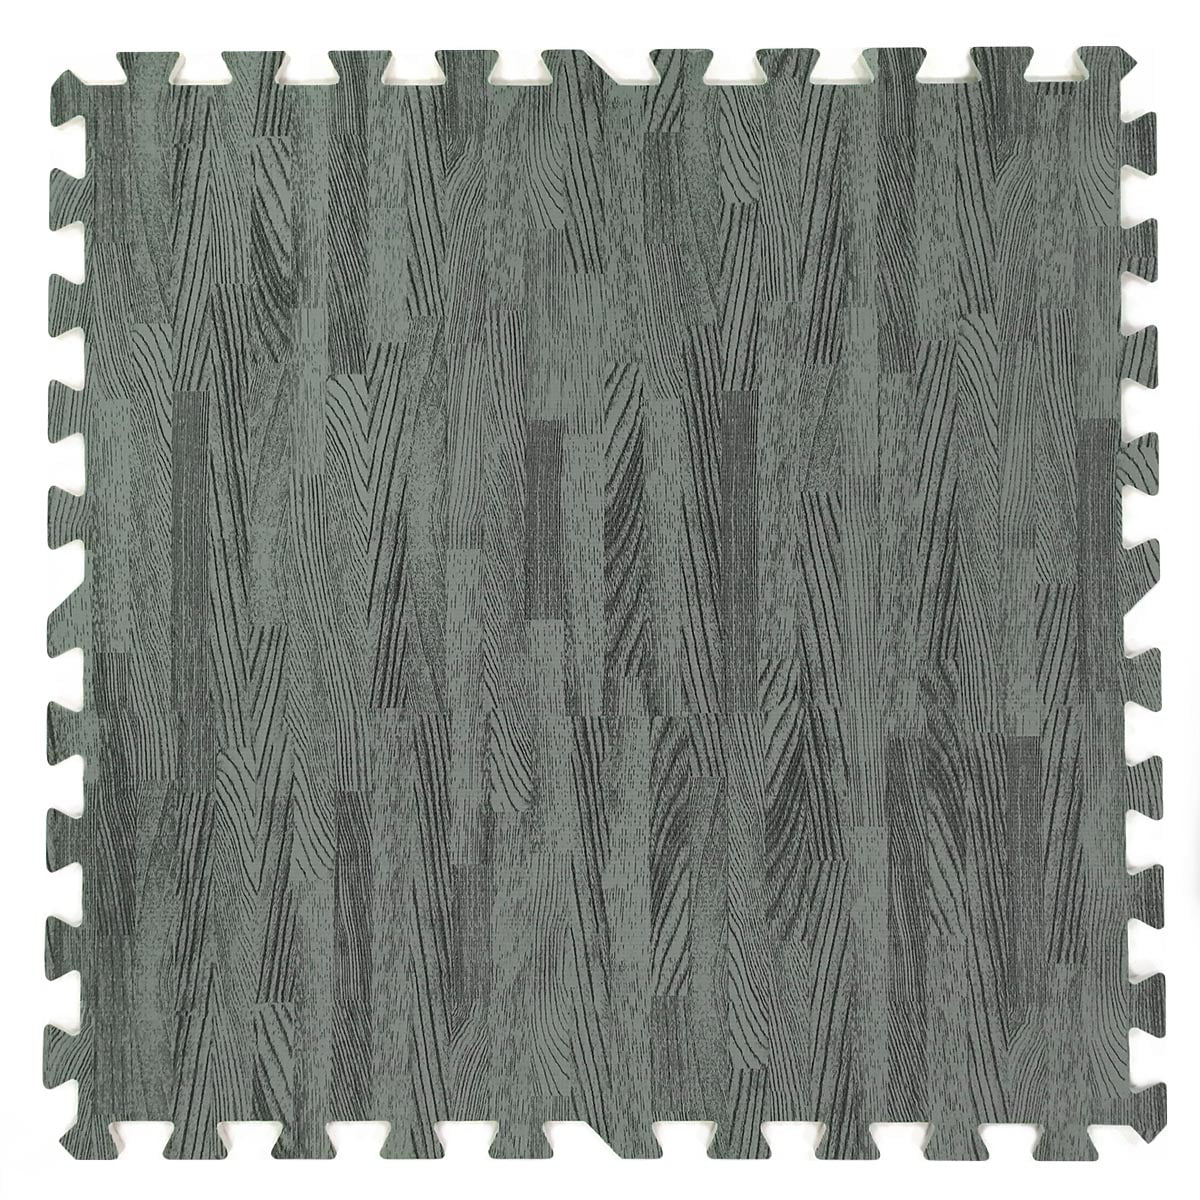 Sale 24-96SQ 0.4" Thick Wood Grain EVA Foam Interlocking Tile Floor Mat NonToxic 